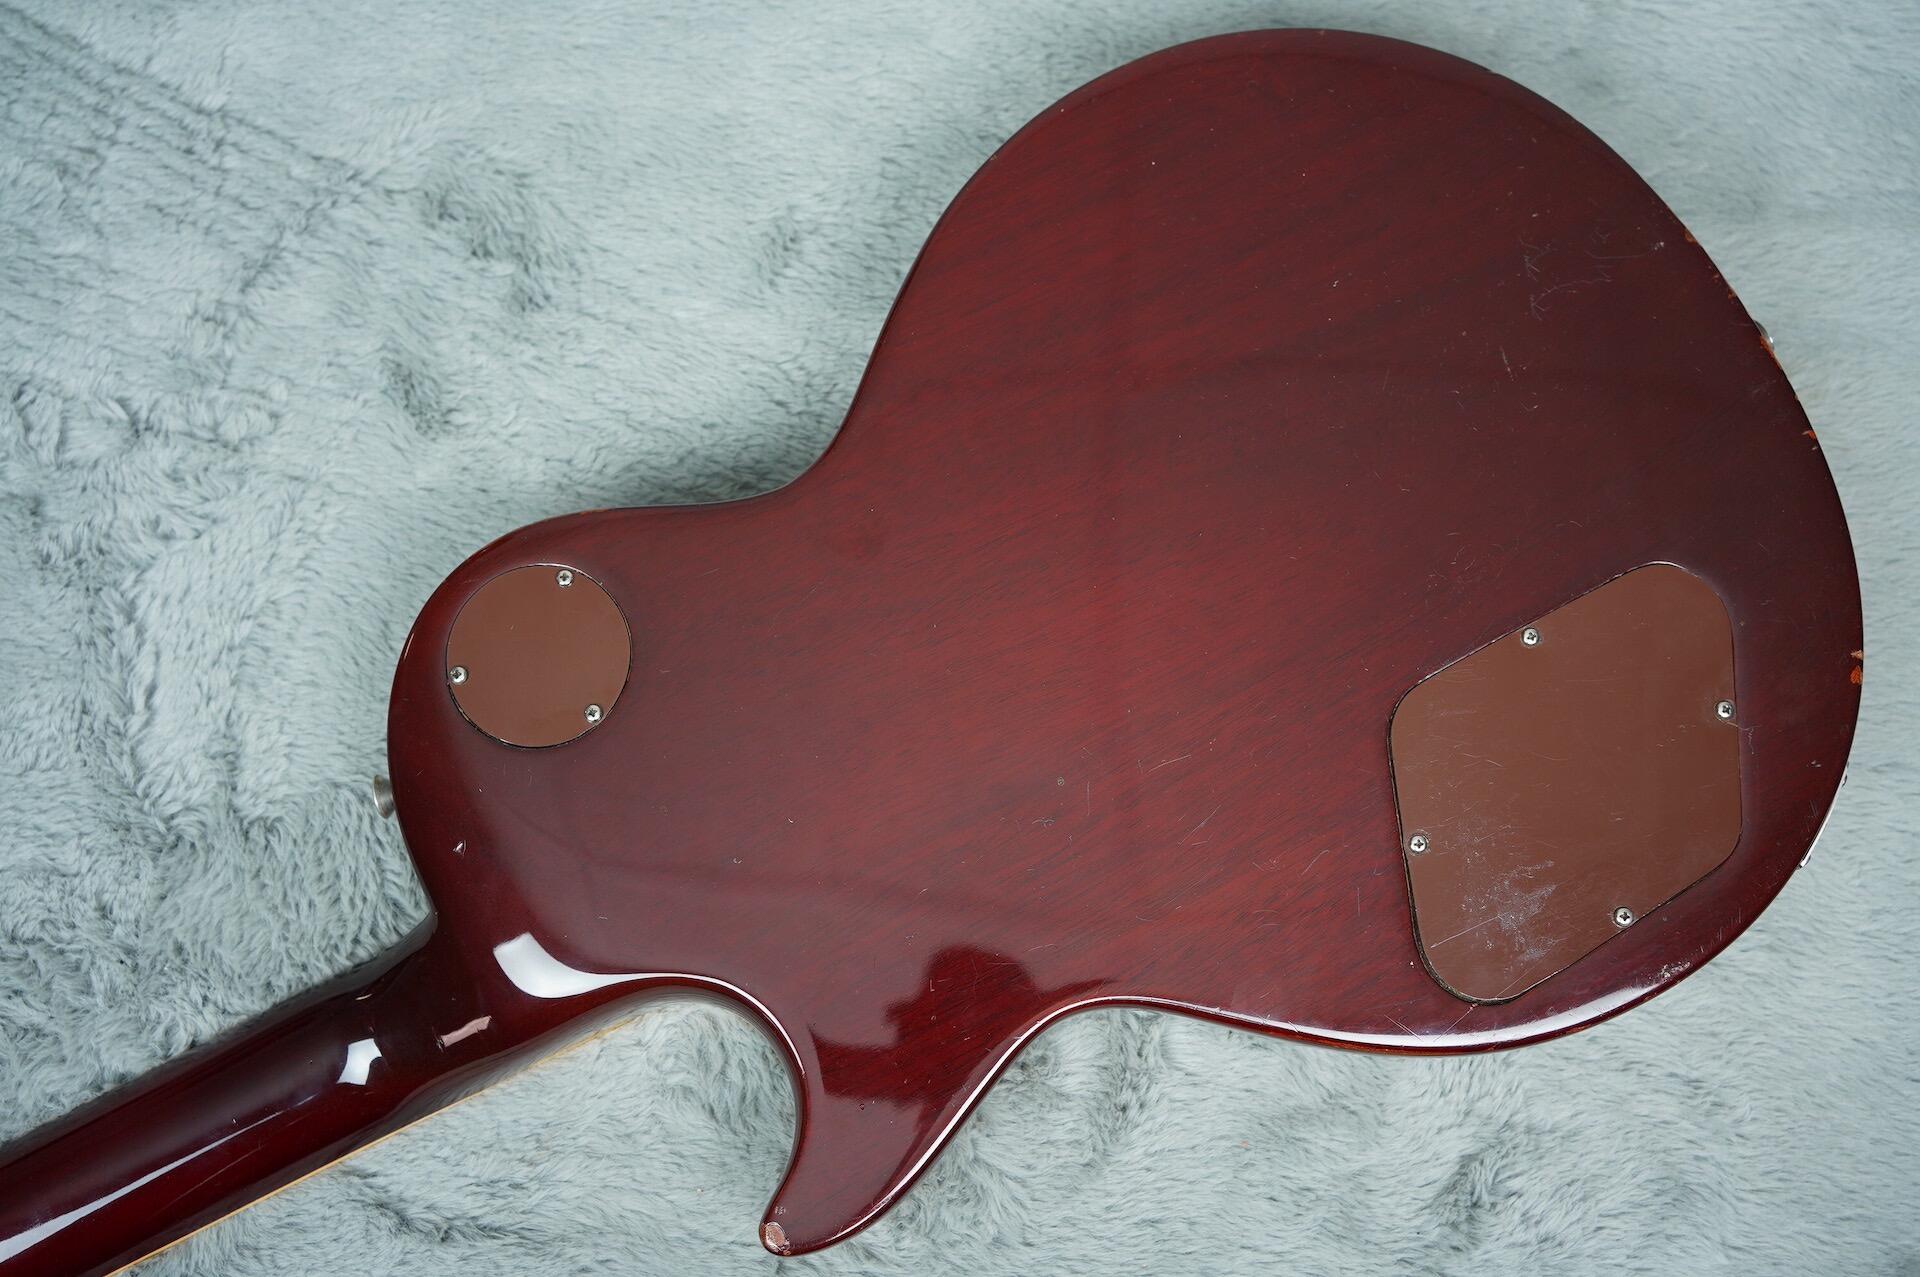 1958 Gibson Les Paul Standard